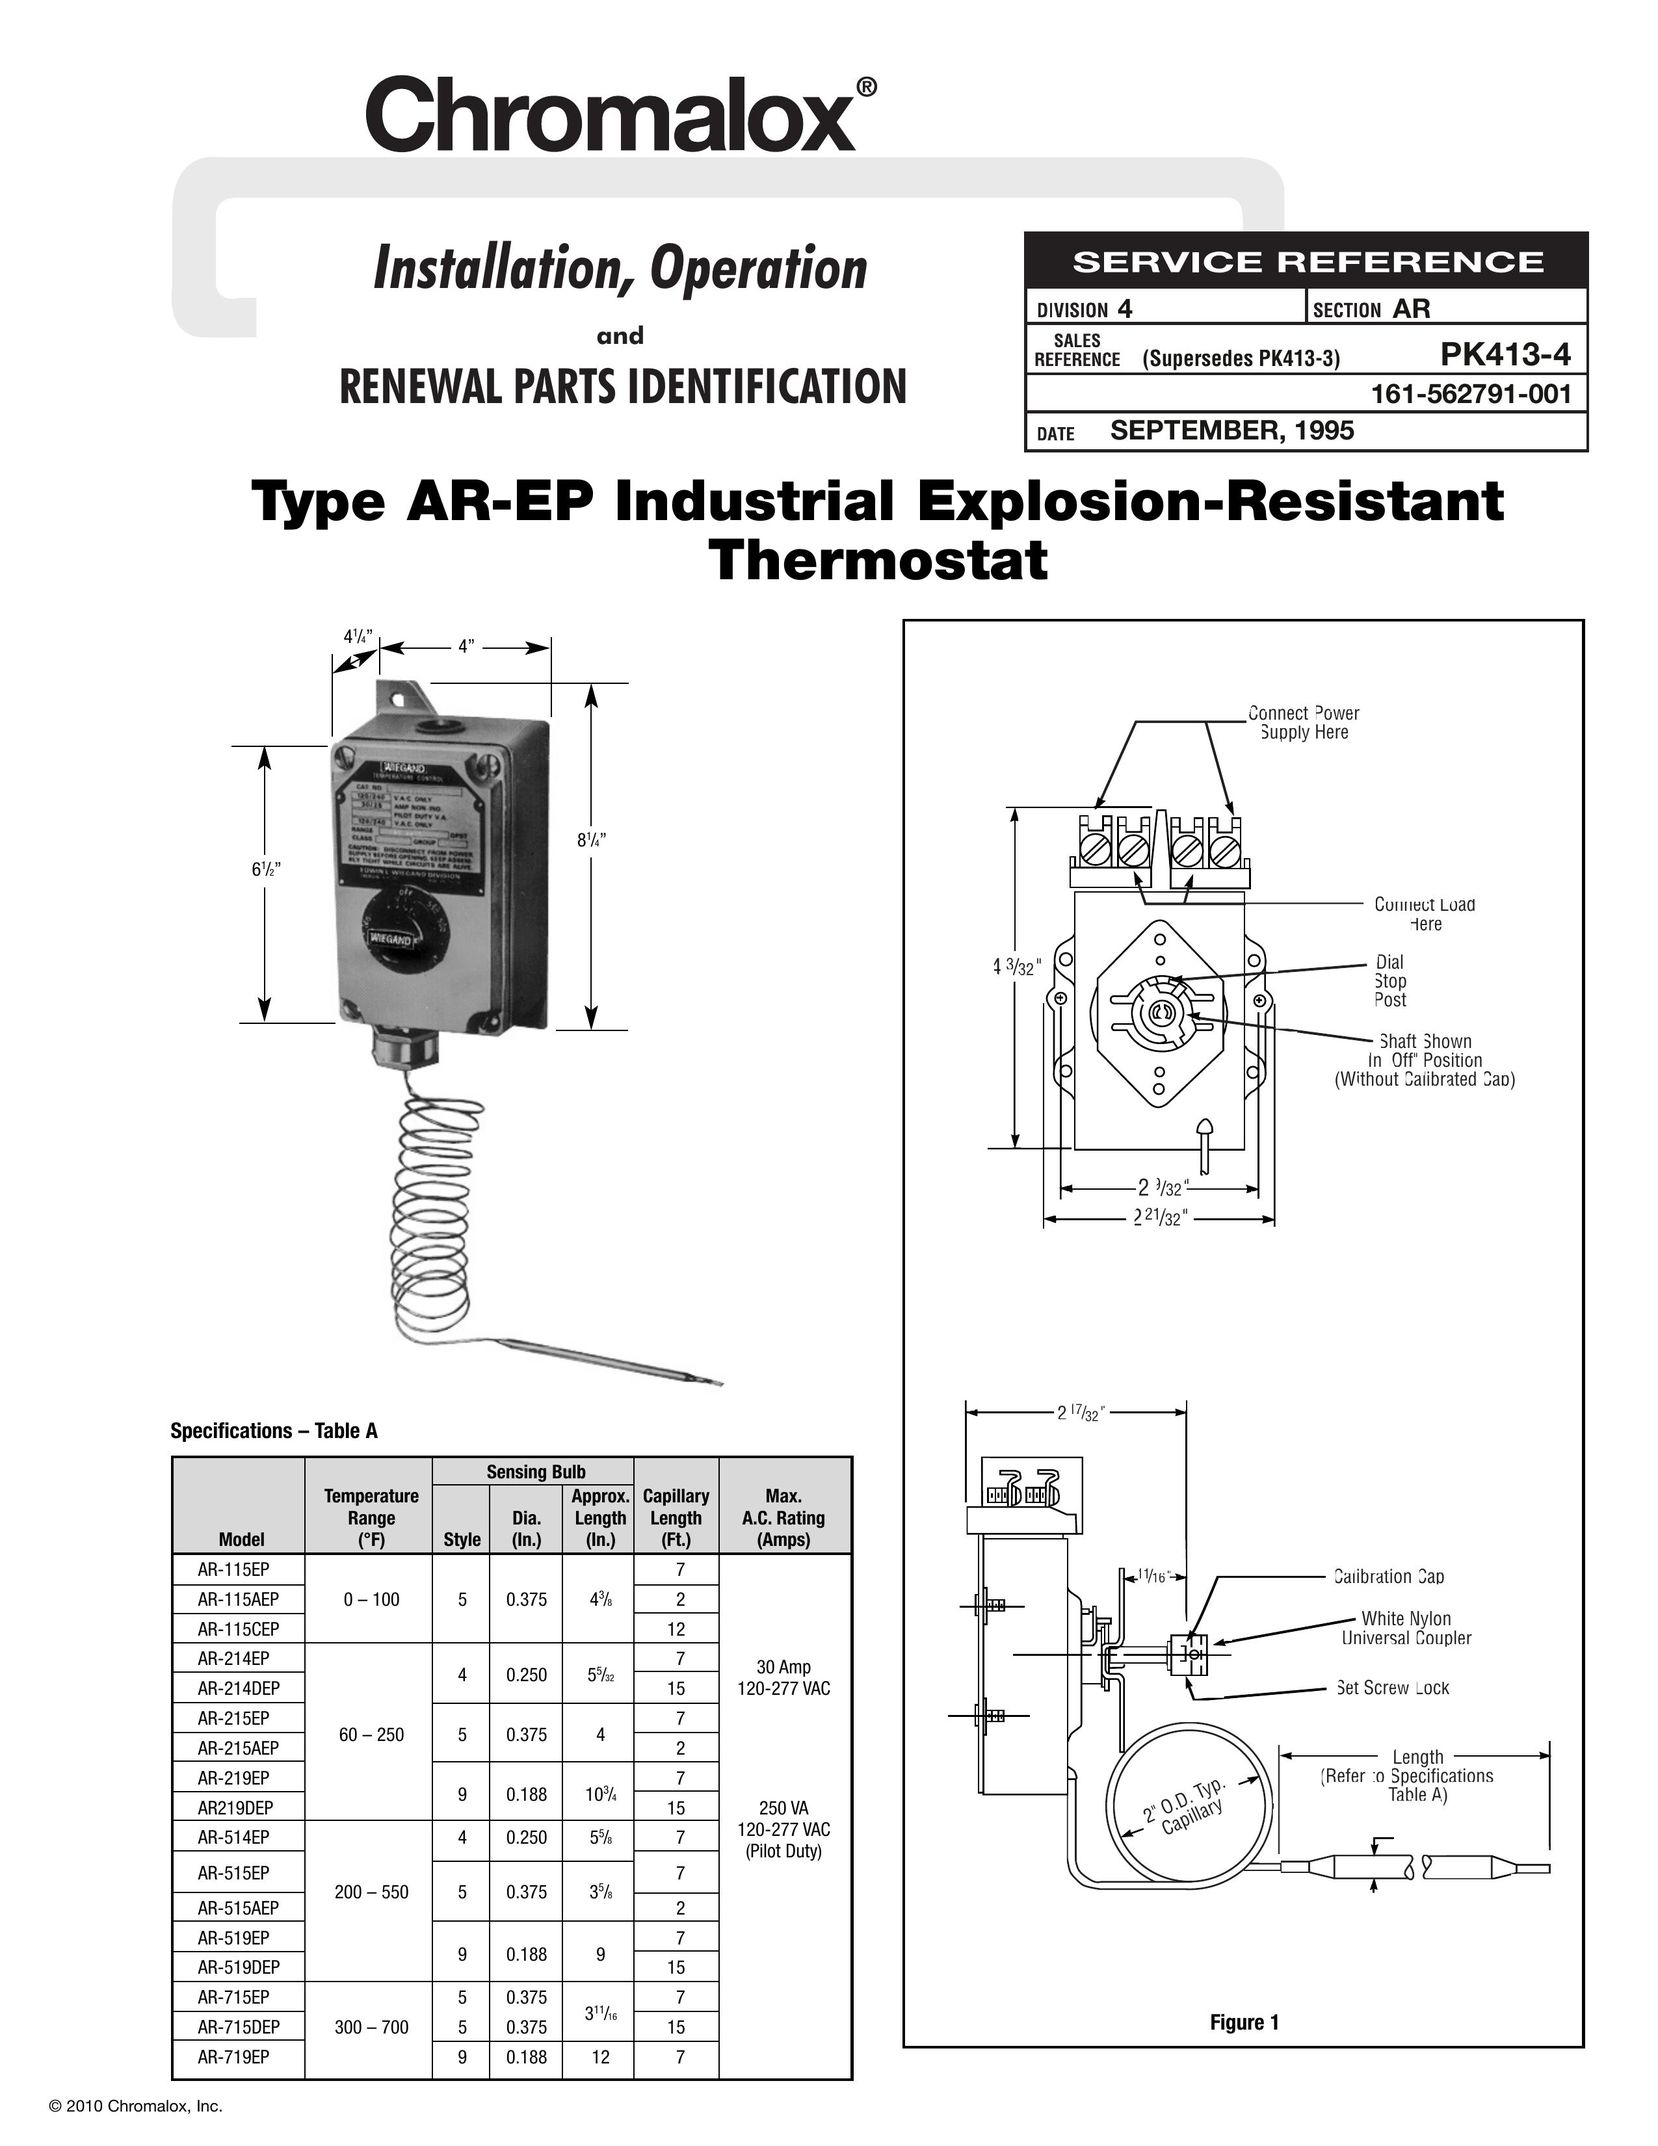 Chromalox PK413-4 Thermostat User Manual